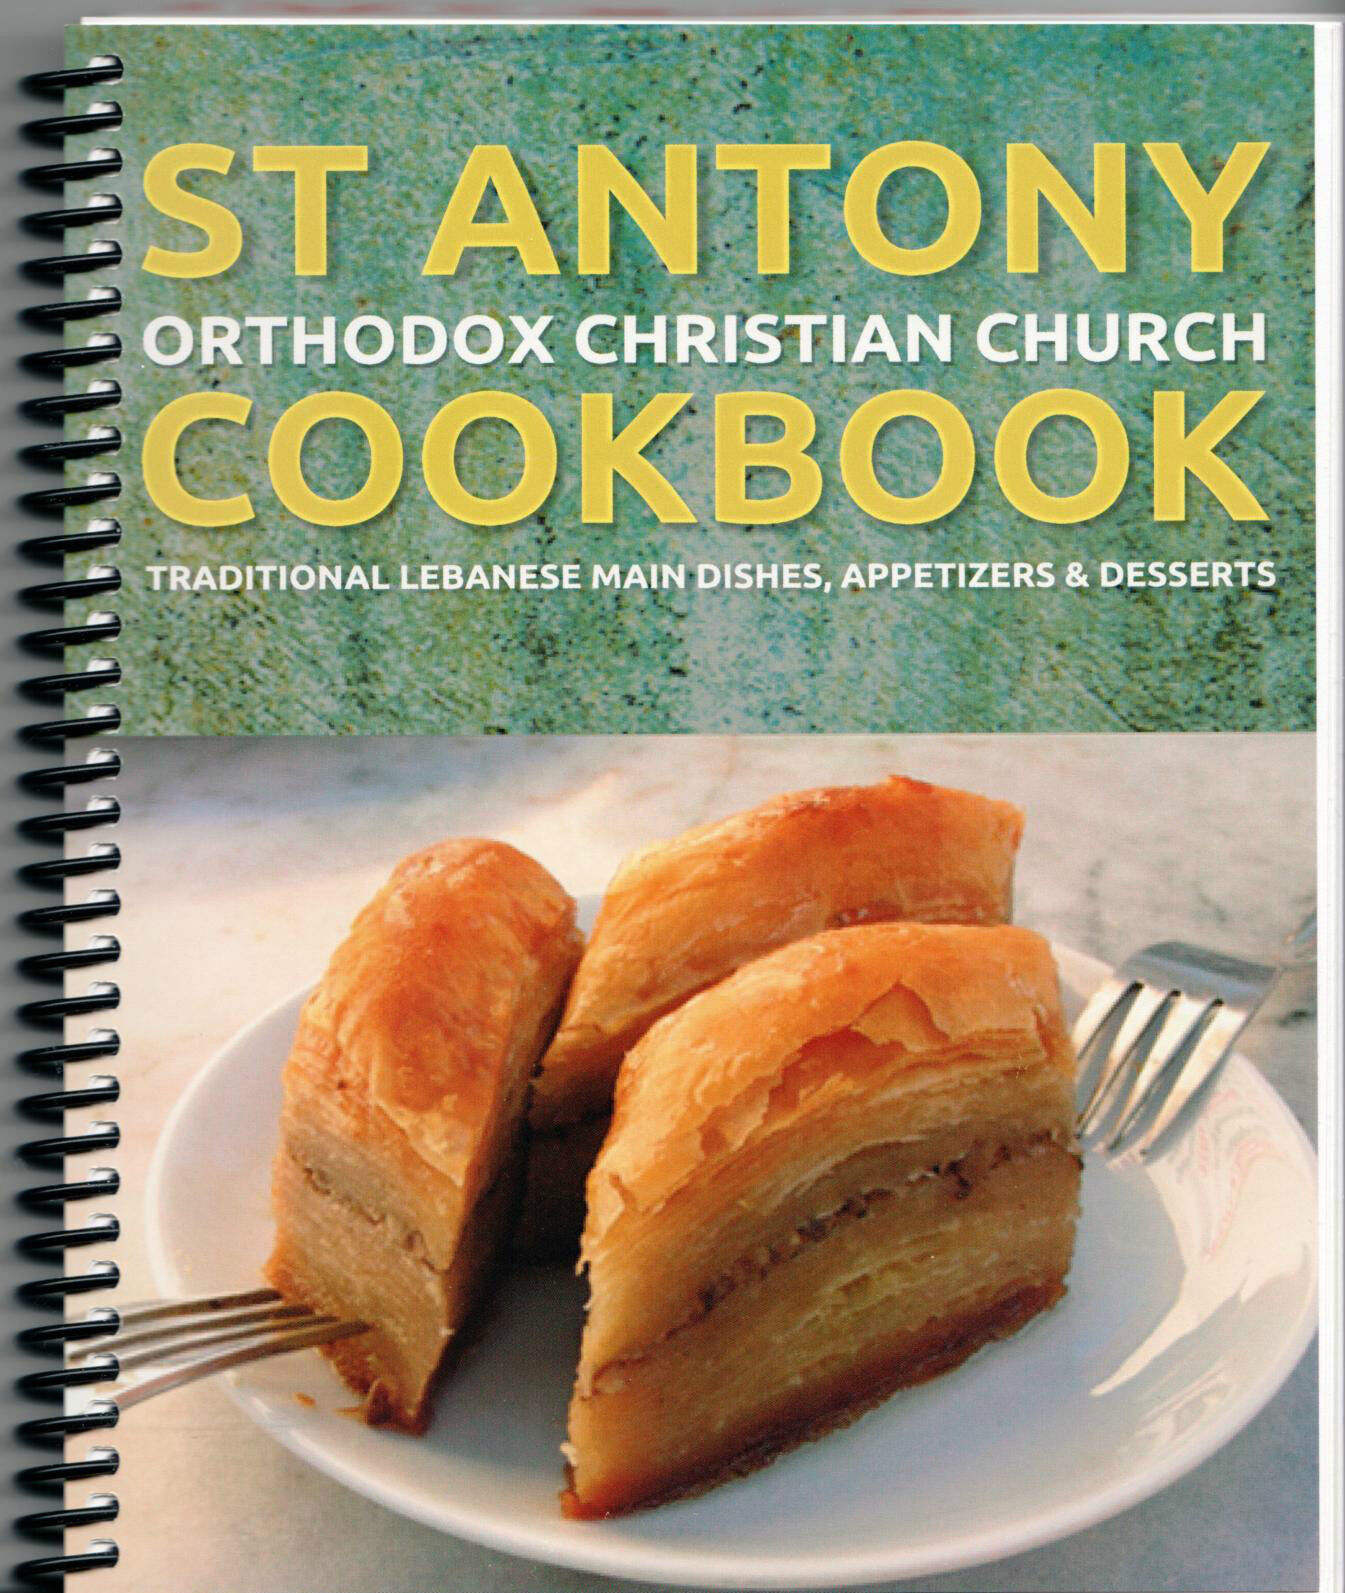 Cookbook: Traditional Lebanese Cooking -St Antony Orthodox Christian Church -NEW